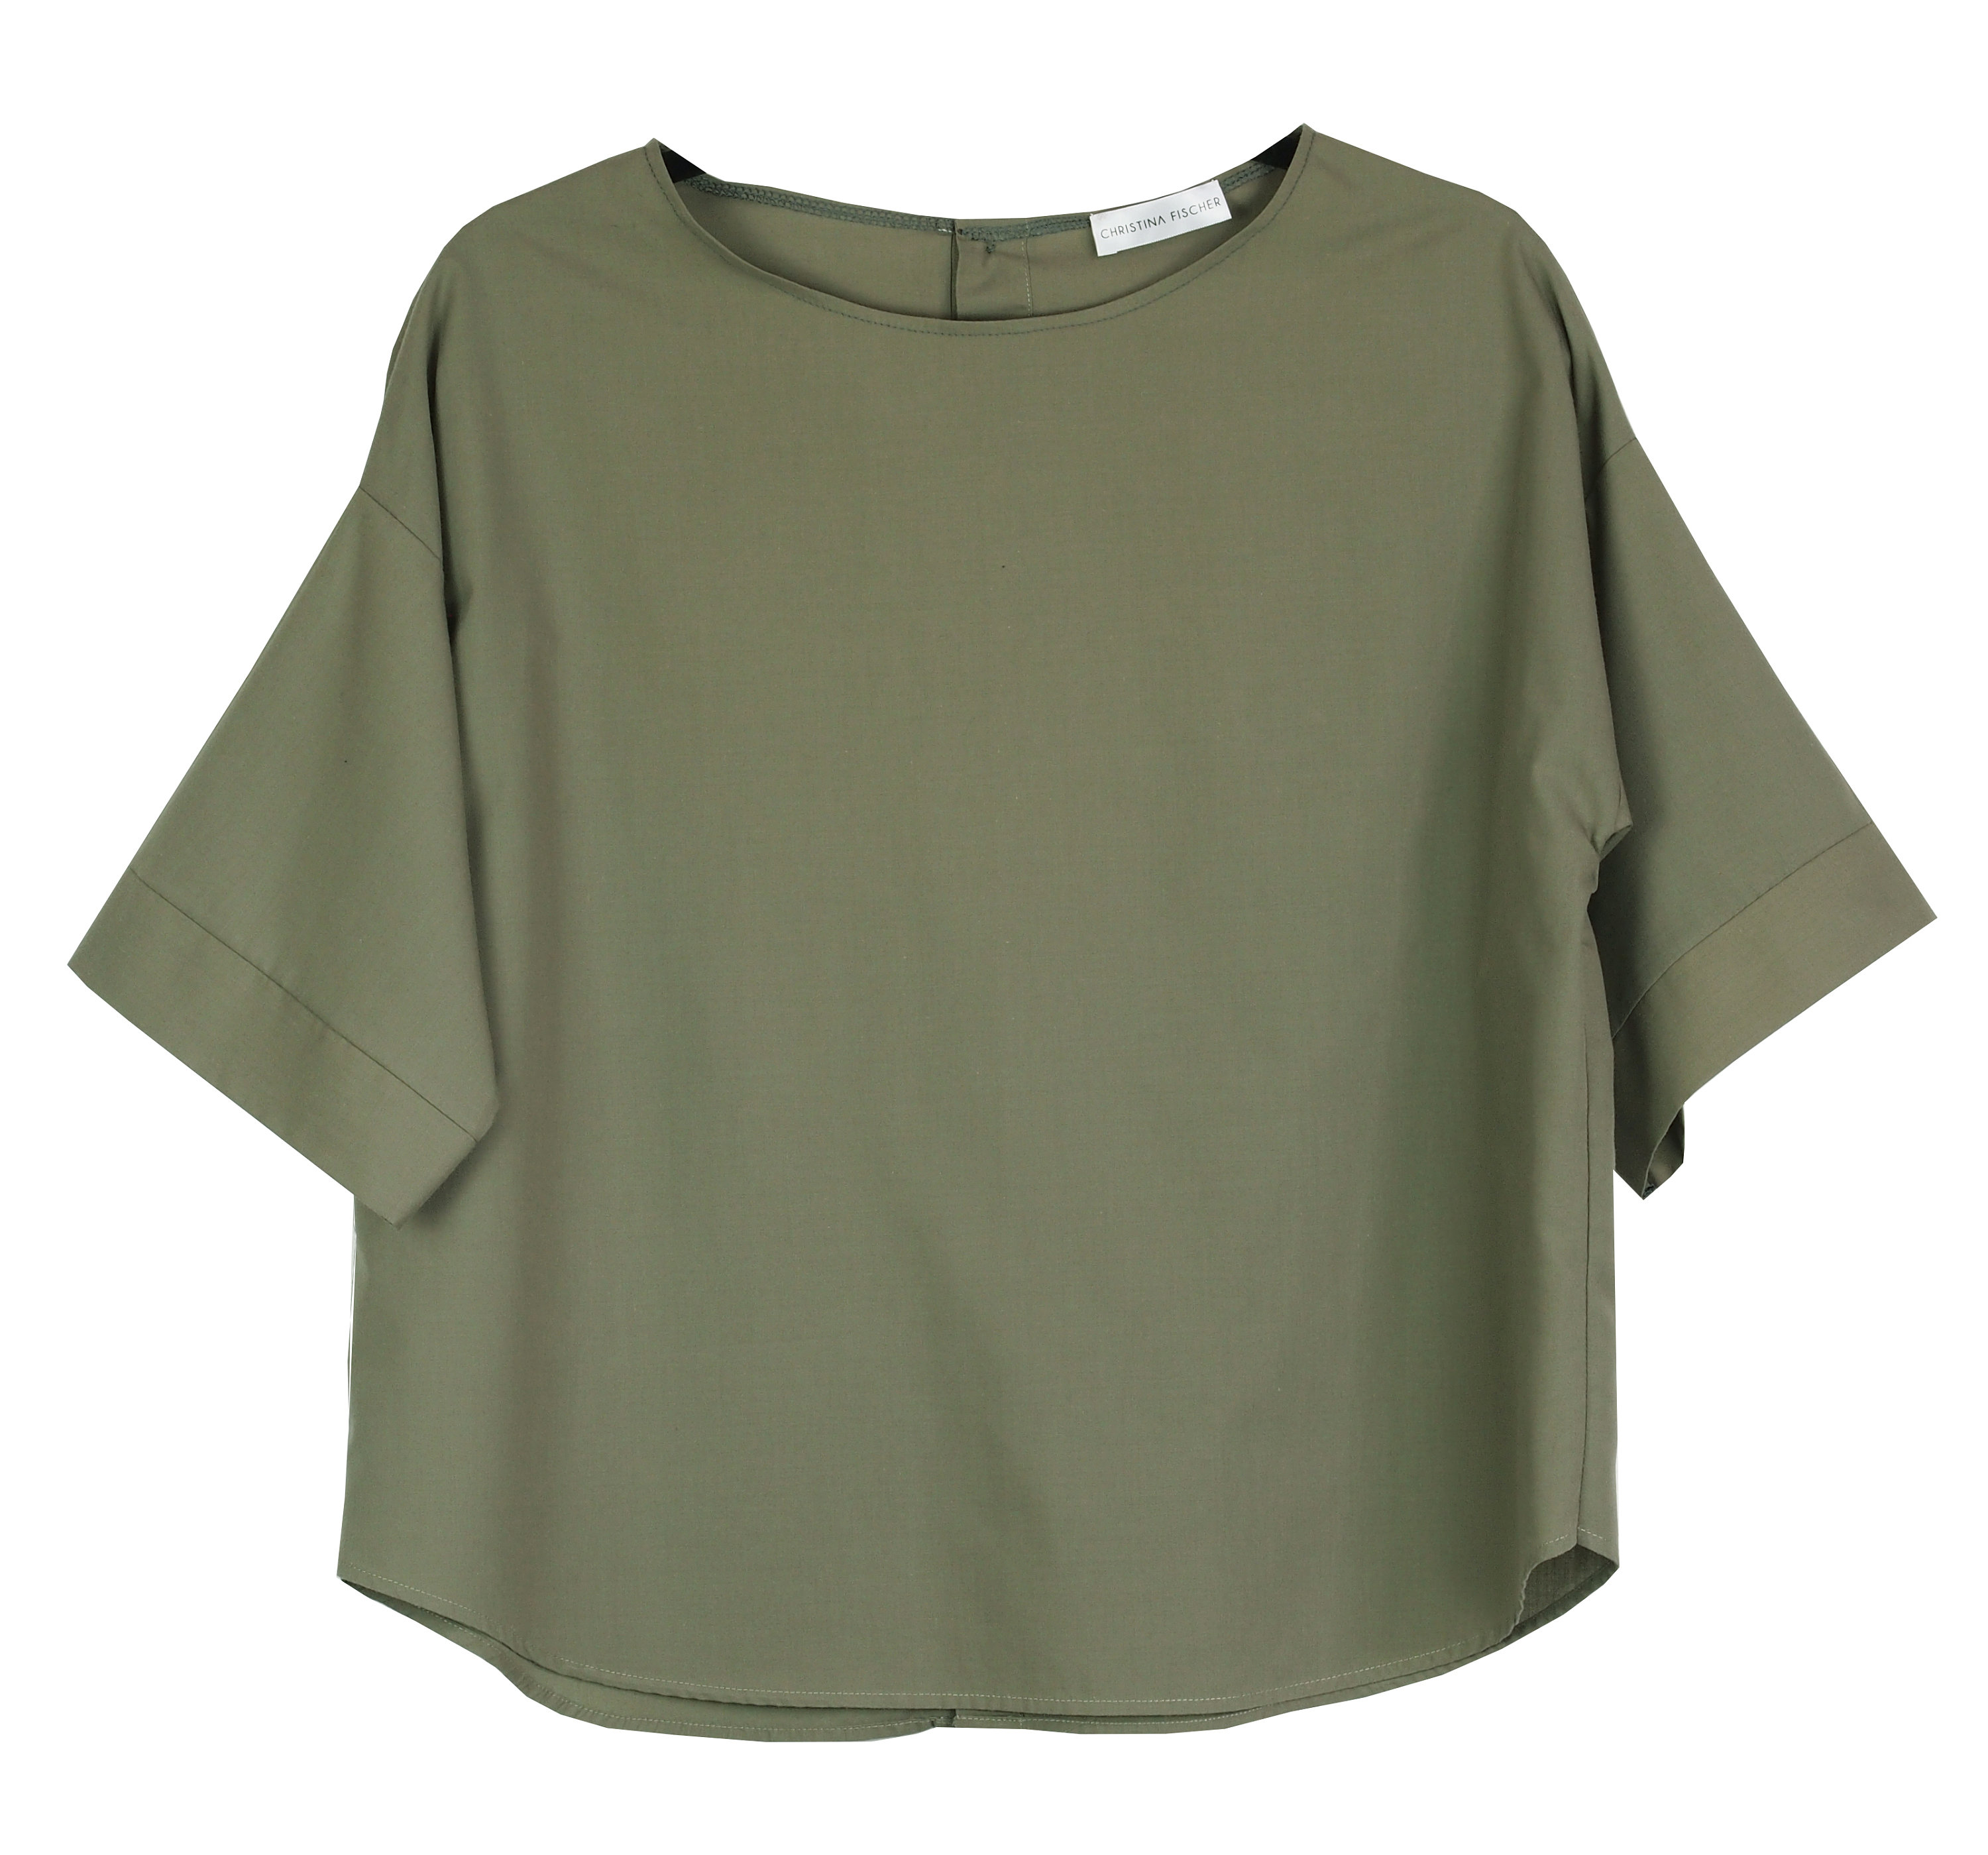 Upcycled mens shirt / button up shirt / t-shirt / loose blouse | Etsy